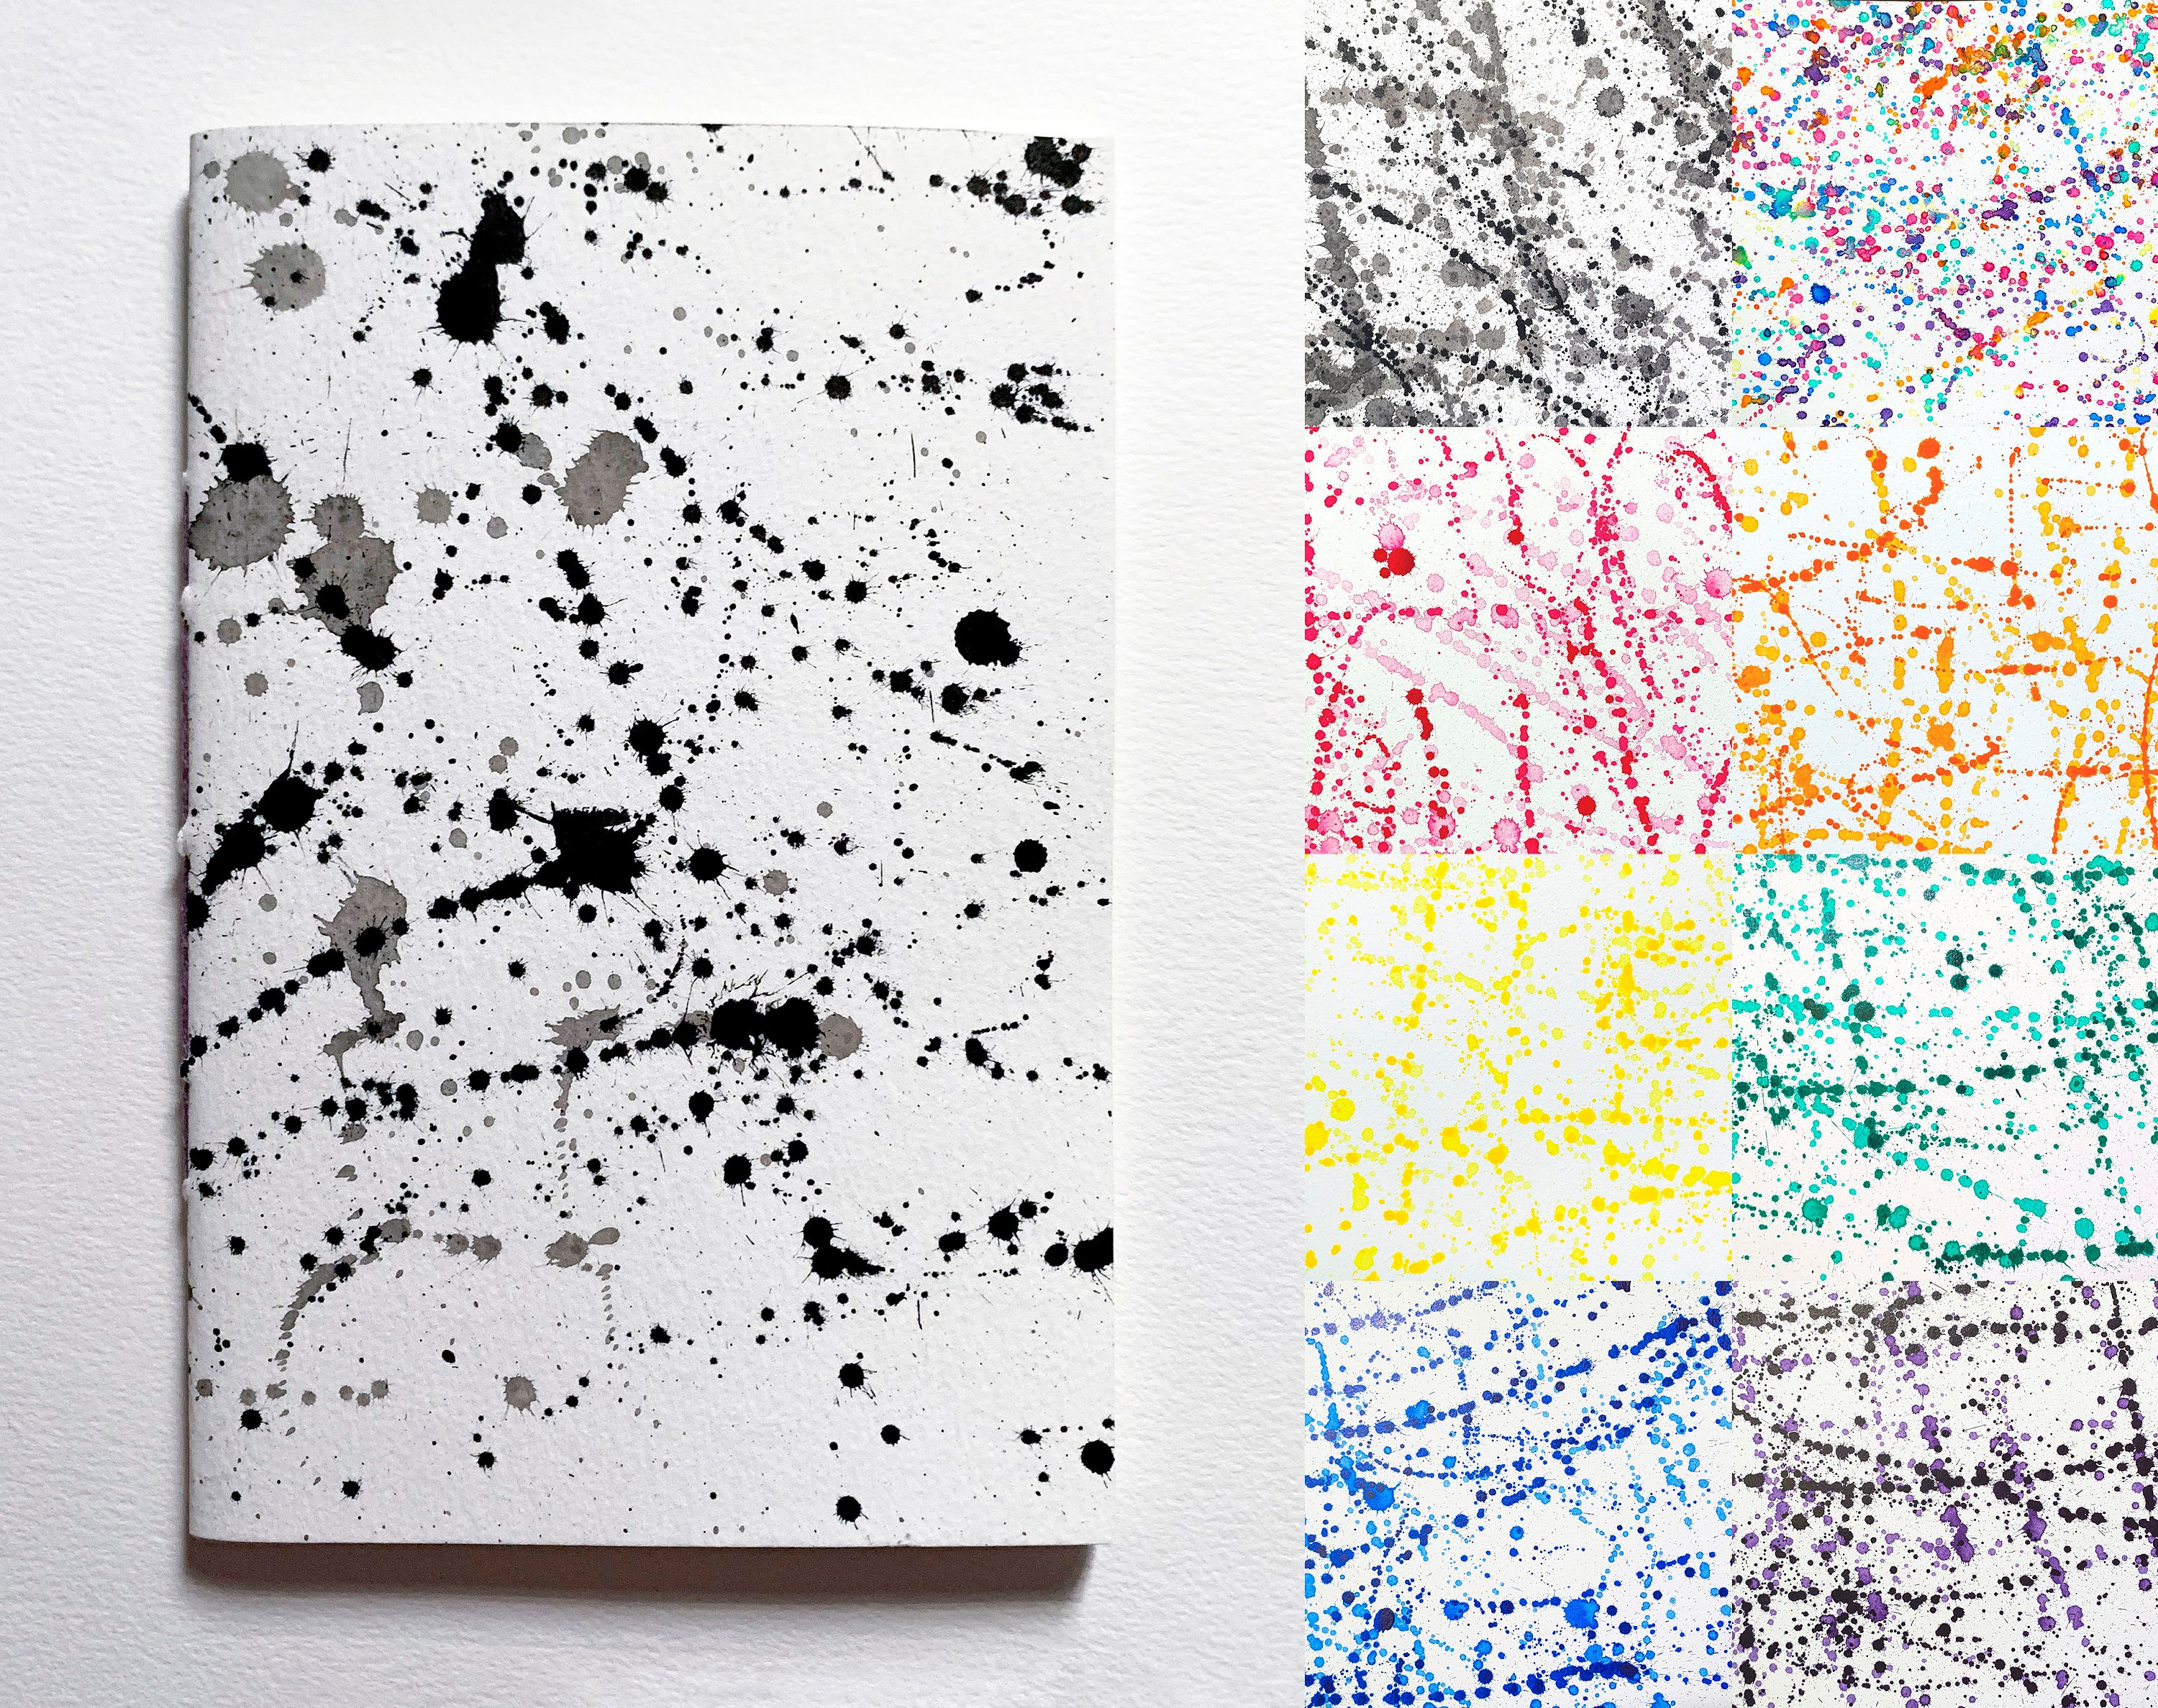 Sketchbook: Abstract Paint Splatter, Blank Sketch Book for Kids